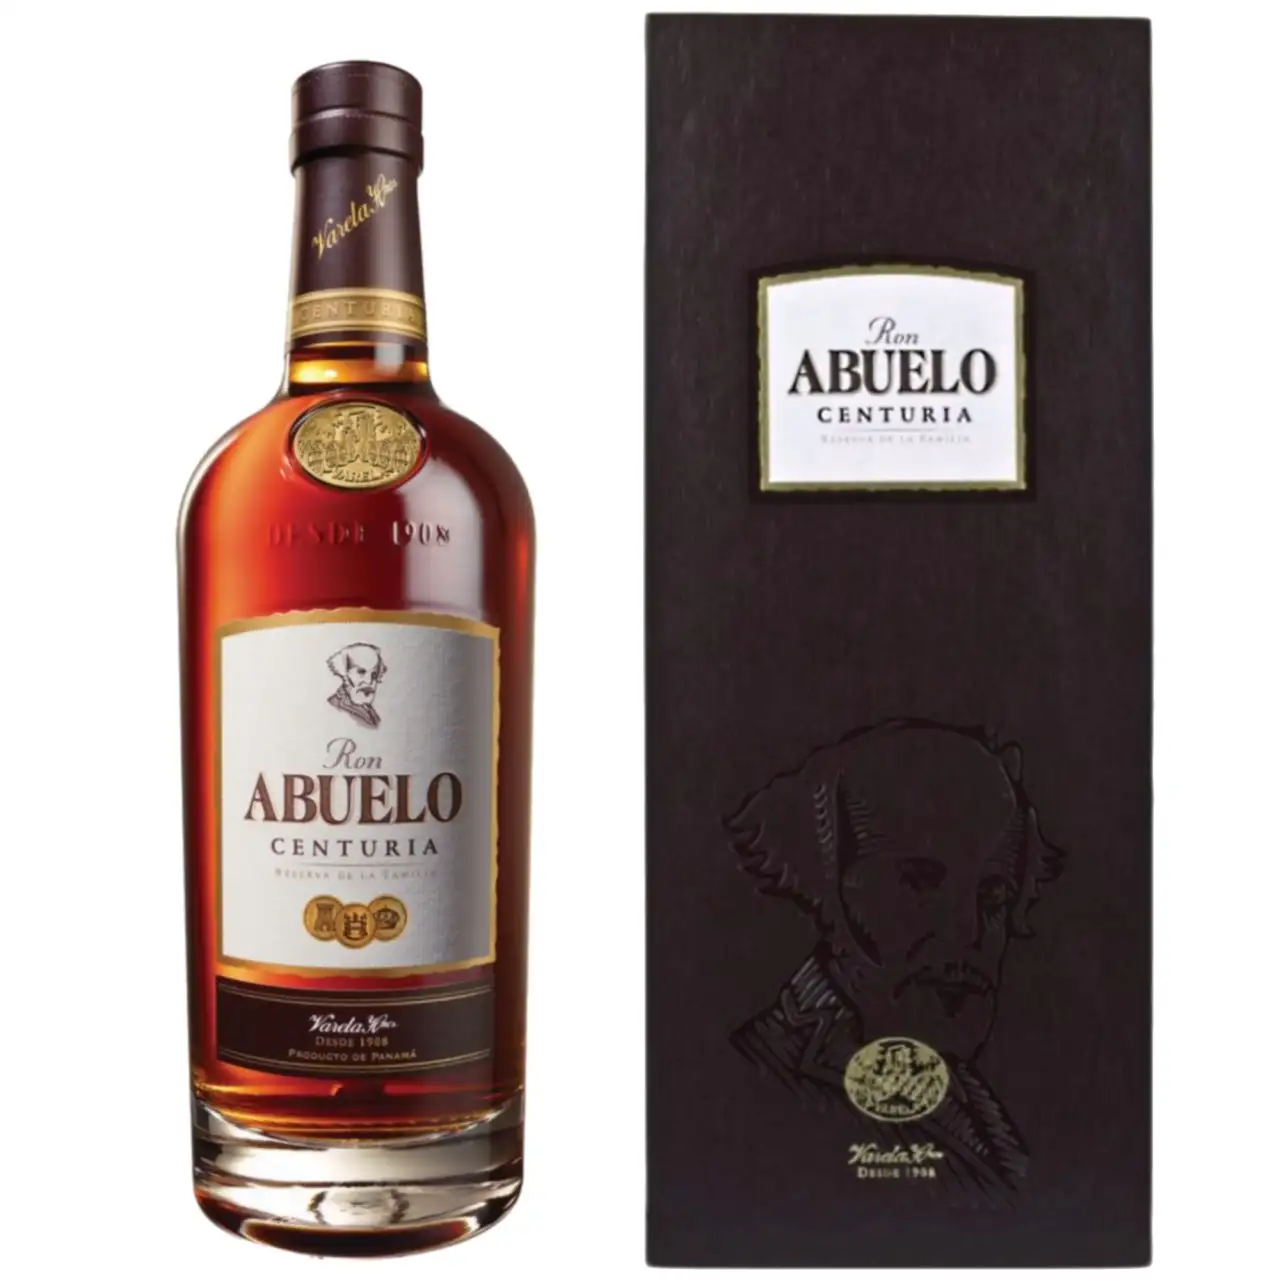 Image of the front of the bottle of the rum Abuelo Reserva de la Familia